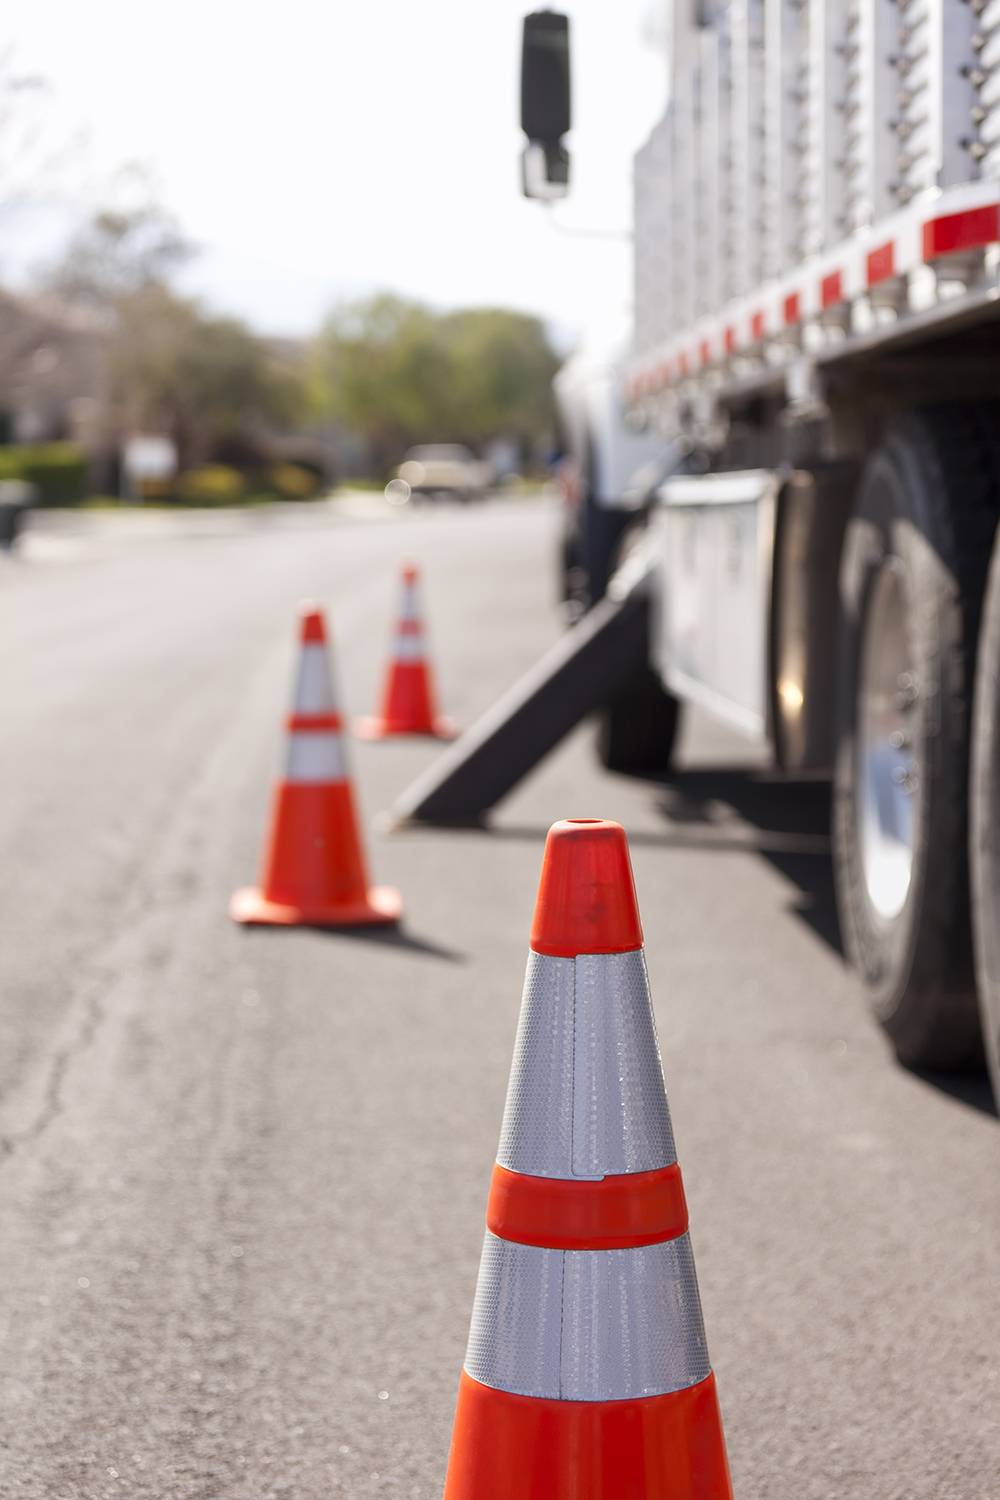 Orange hazard safety cones and work truck on the road